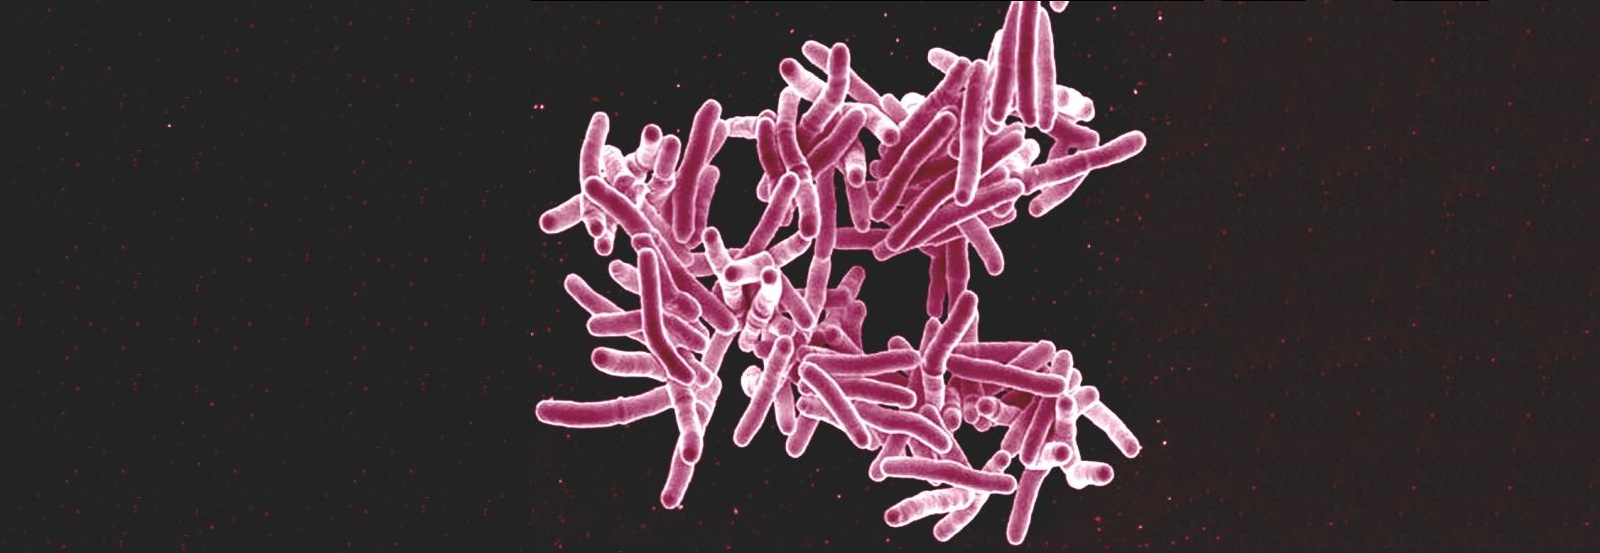 Using shotgun metagenomics to diagnose tuberculosis